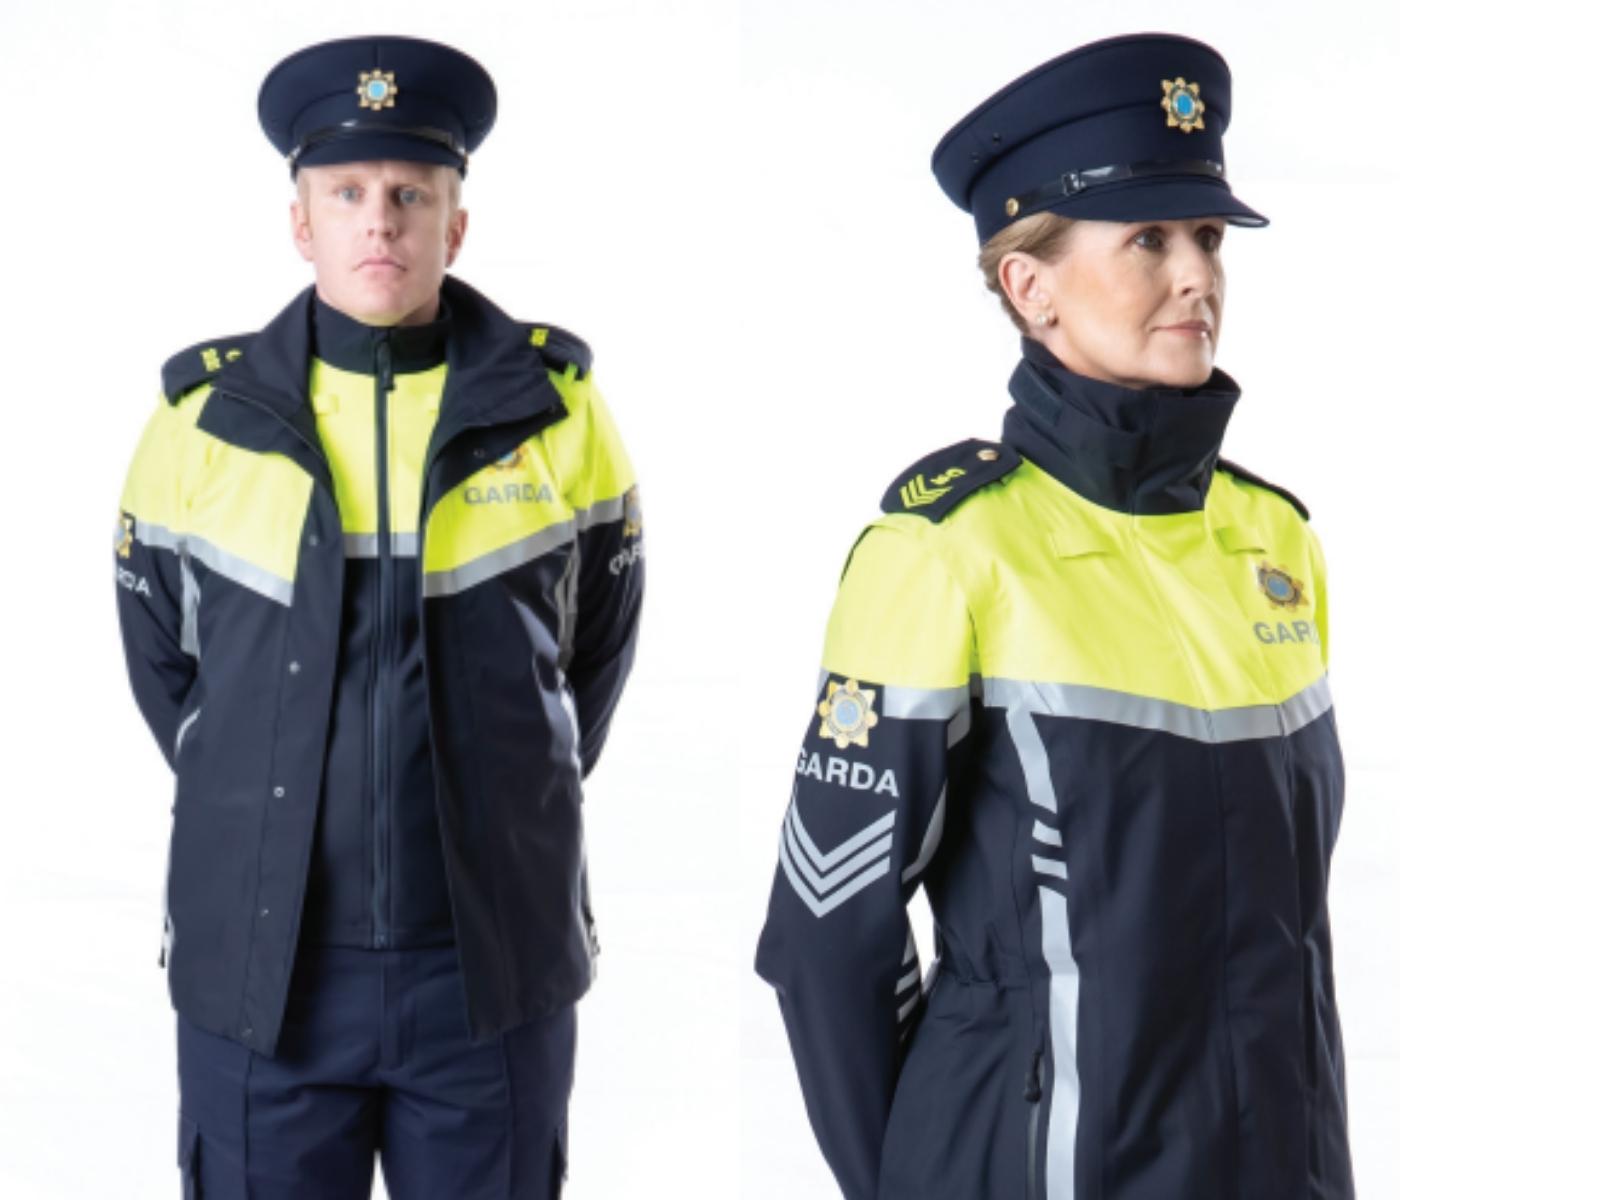 Gardaí wearing their new uniform. Image: An Garda Síochána